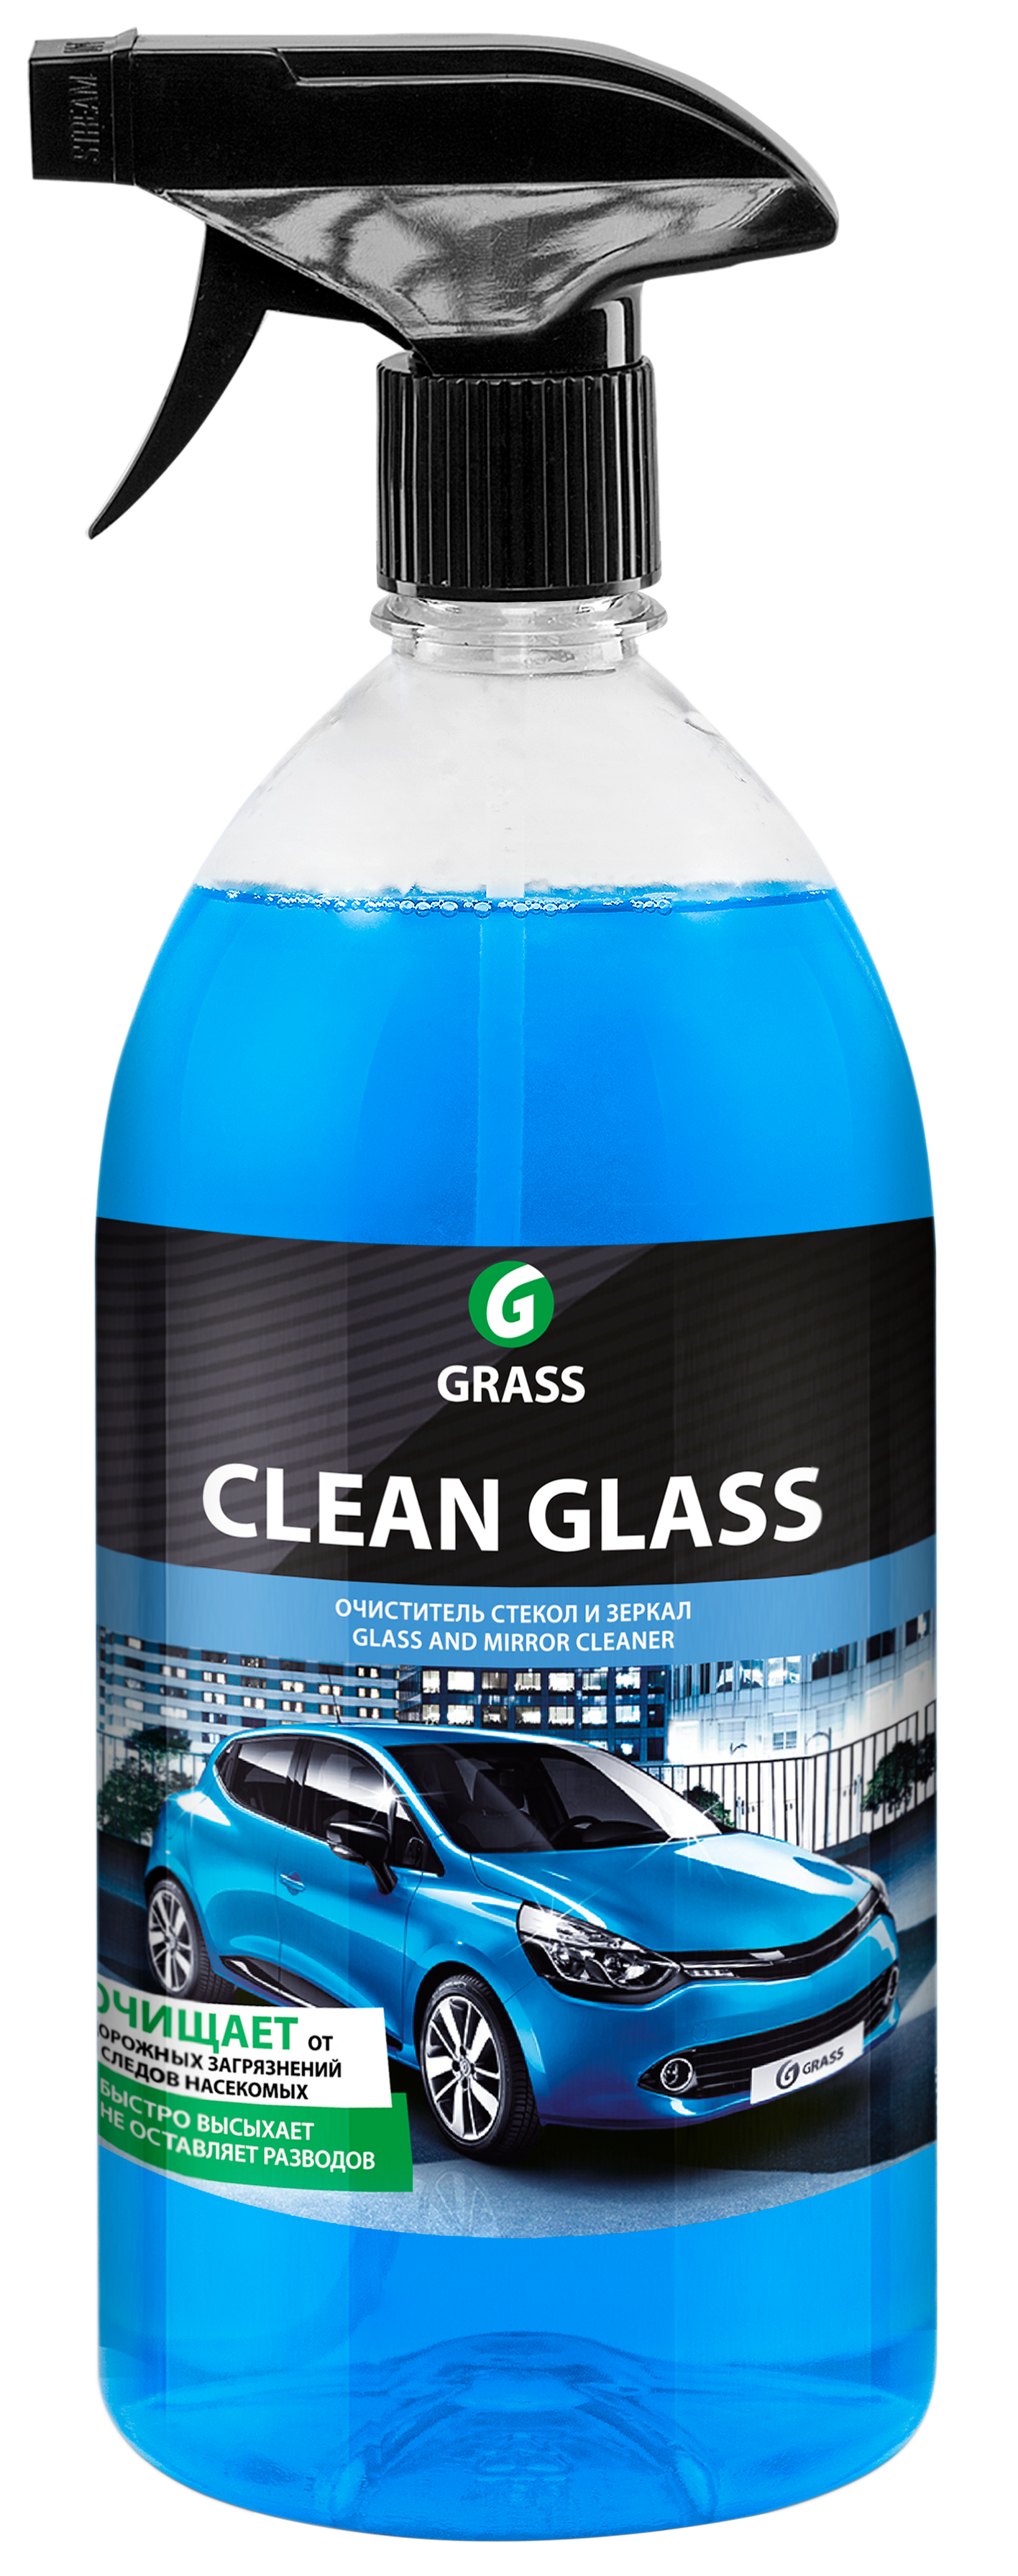 Очиститель стекол clean Glass 600 мл. Grass очиститель стекол clean Glass 1л. Очиститель стекол grass "clean Glass" (1 л.) триггер. Очиститель стекол и зеркал clean Glass, 1л с триггером grass /800448.